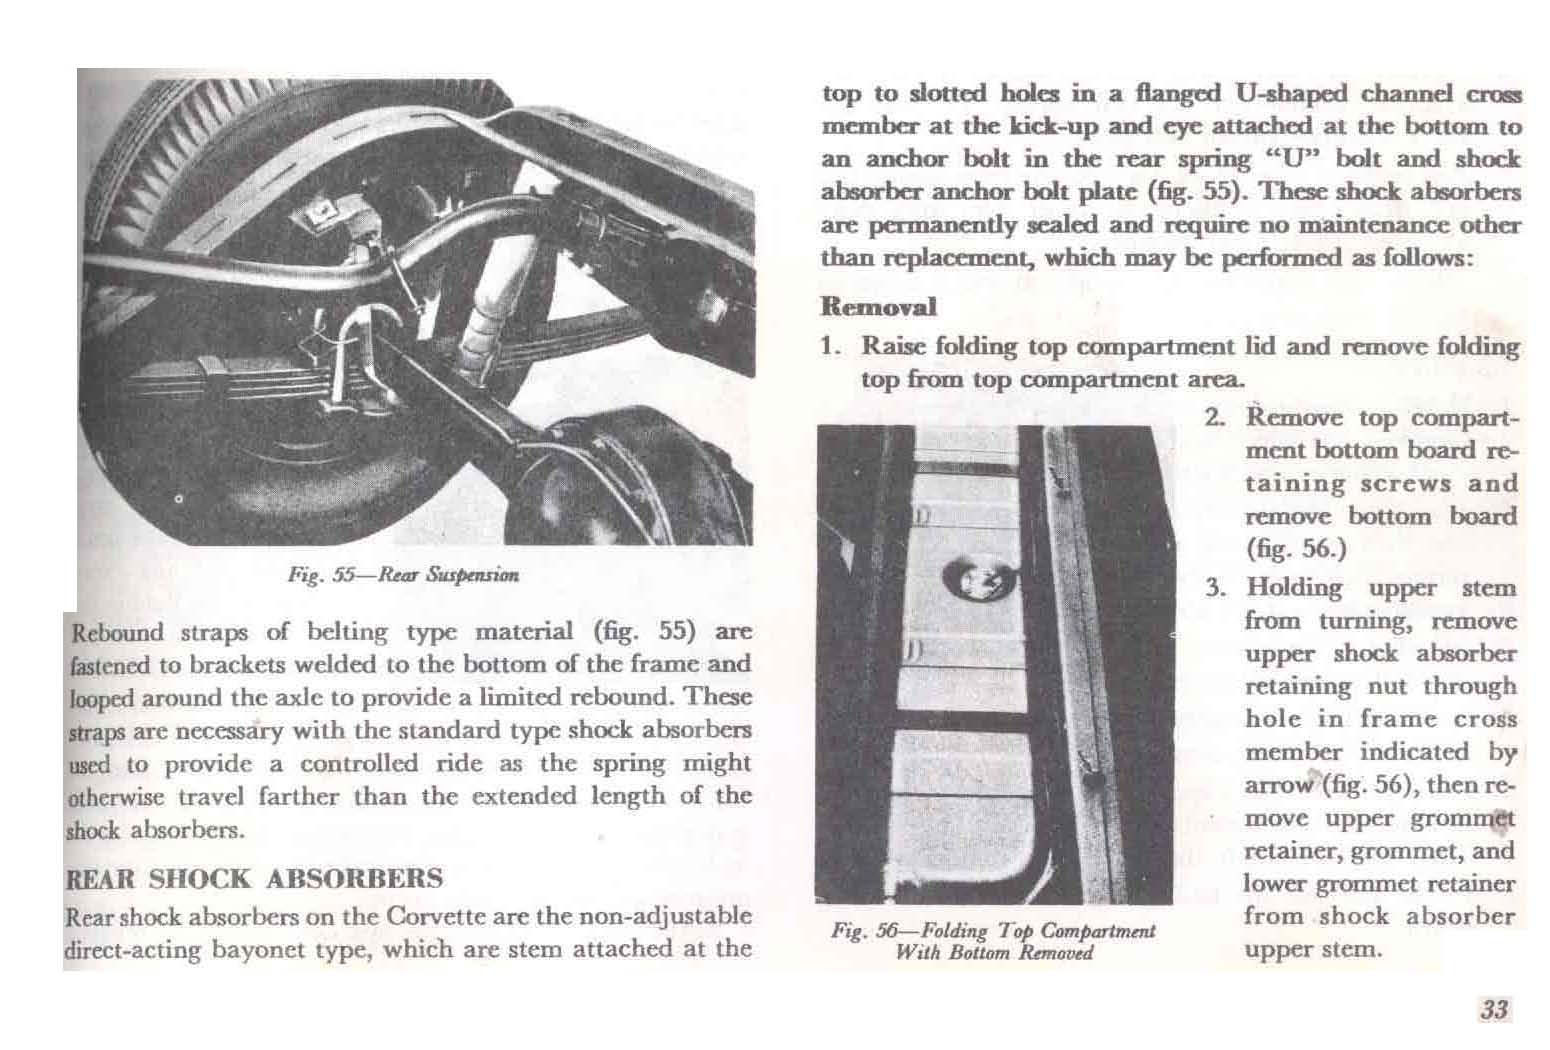 1954_Corvette_Operations_Manual-33